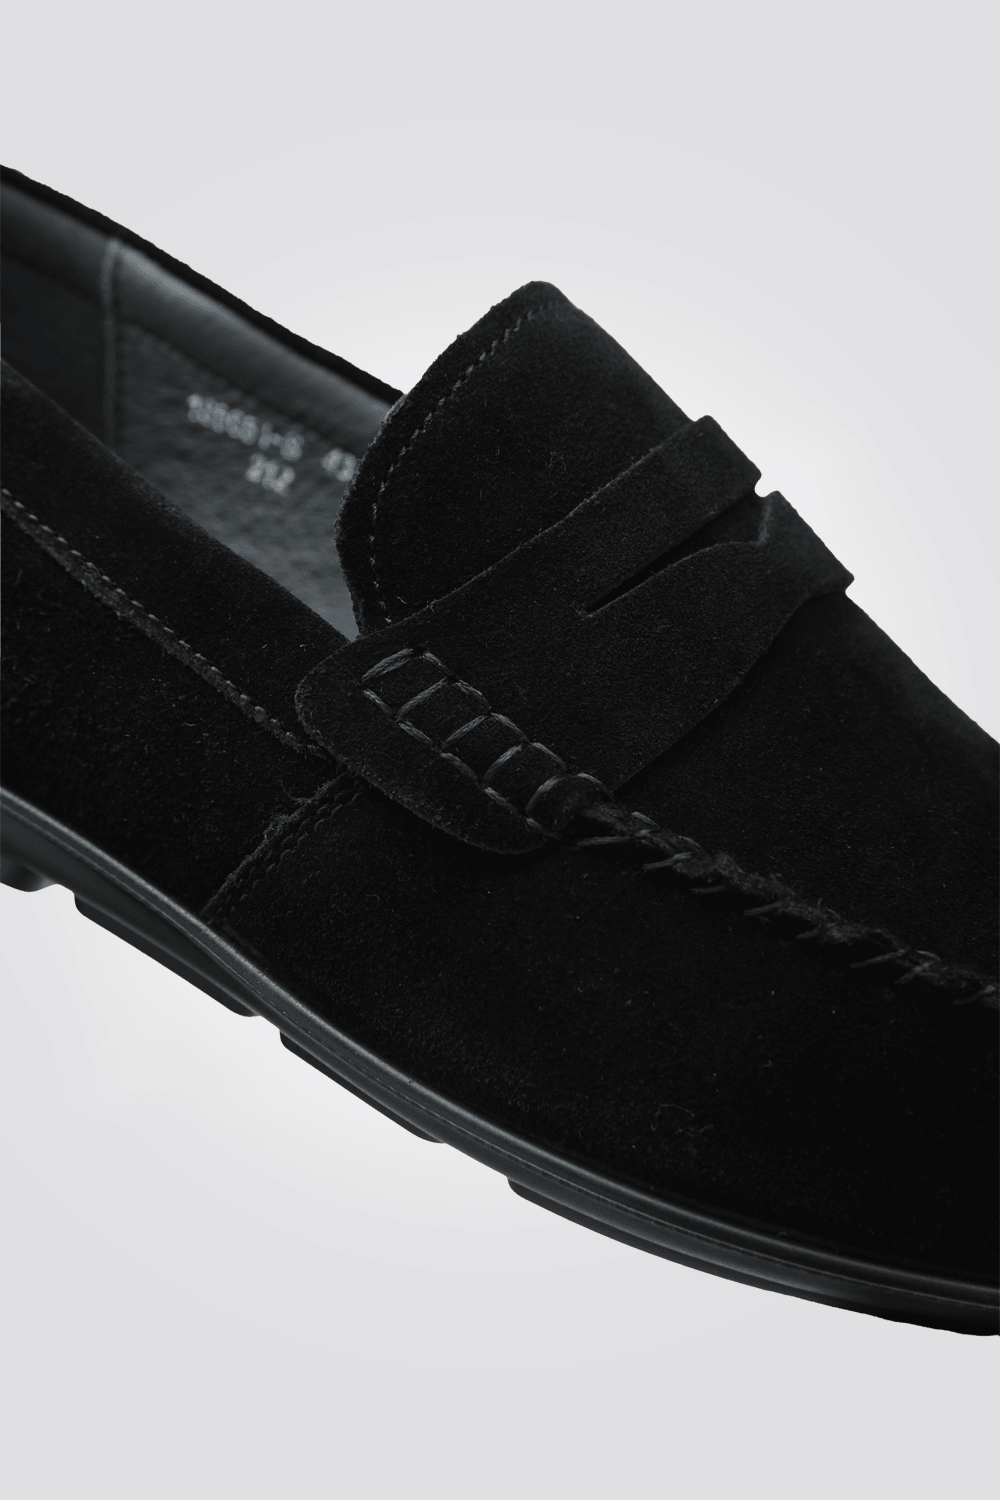 KENNETH COLE - נעל מוקסין לגבר בצבע בשחור - MASHBIR//365